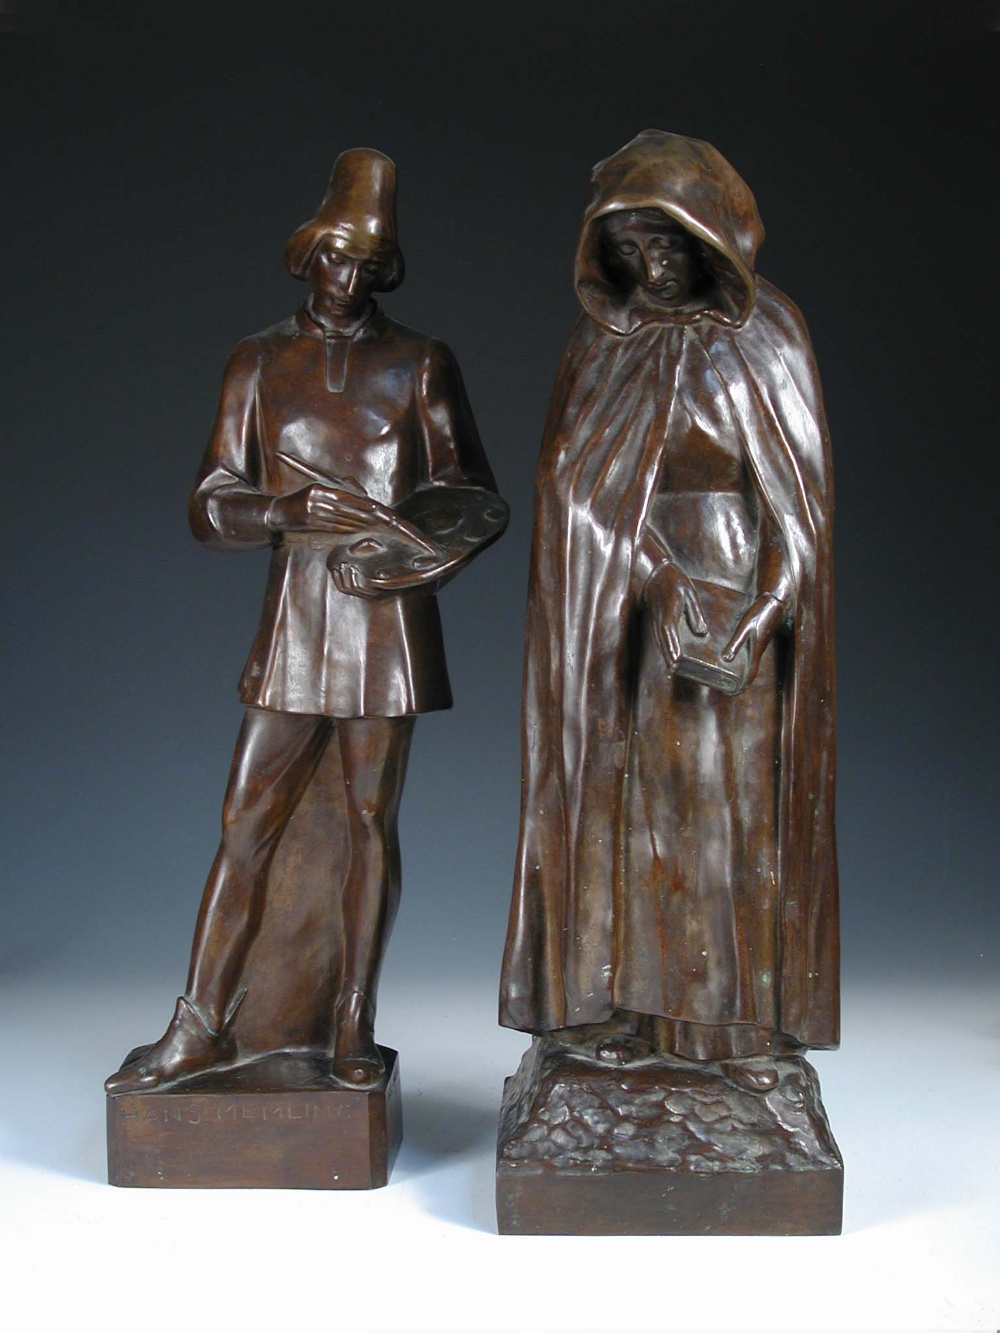 Karel Laloo (1883-1957), a bronze figure of a lady, she stands wearing a hooded cloak, she looks